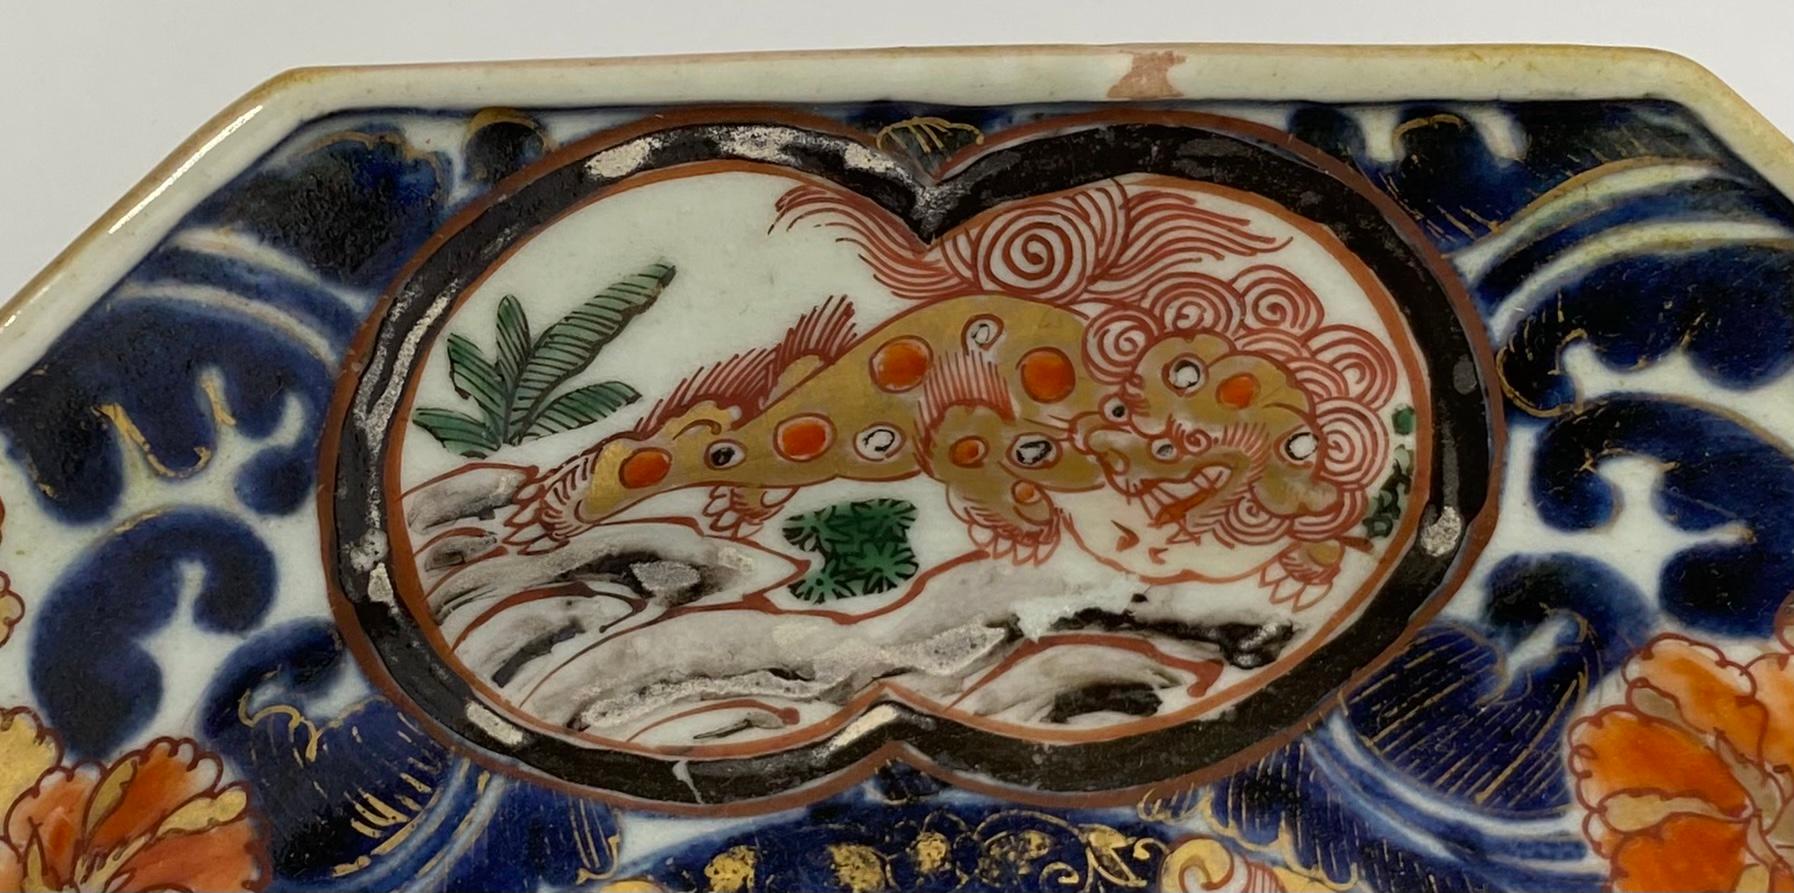 Japanese Imari Porcelain Dish, Arita, Japan, circa 1700, Genroku Period